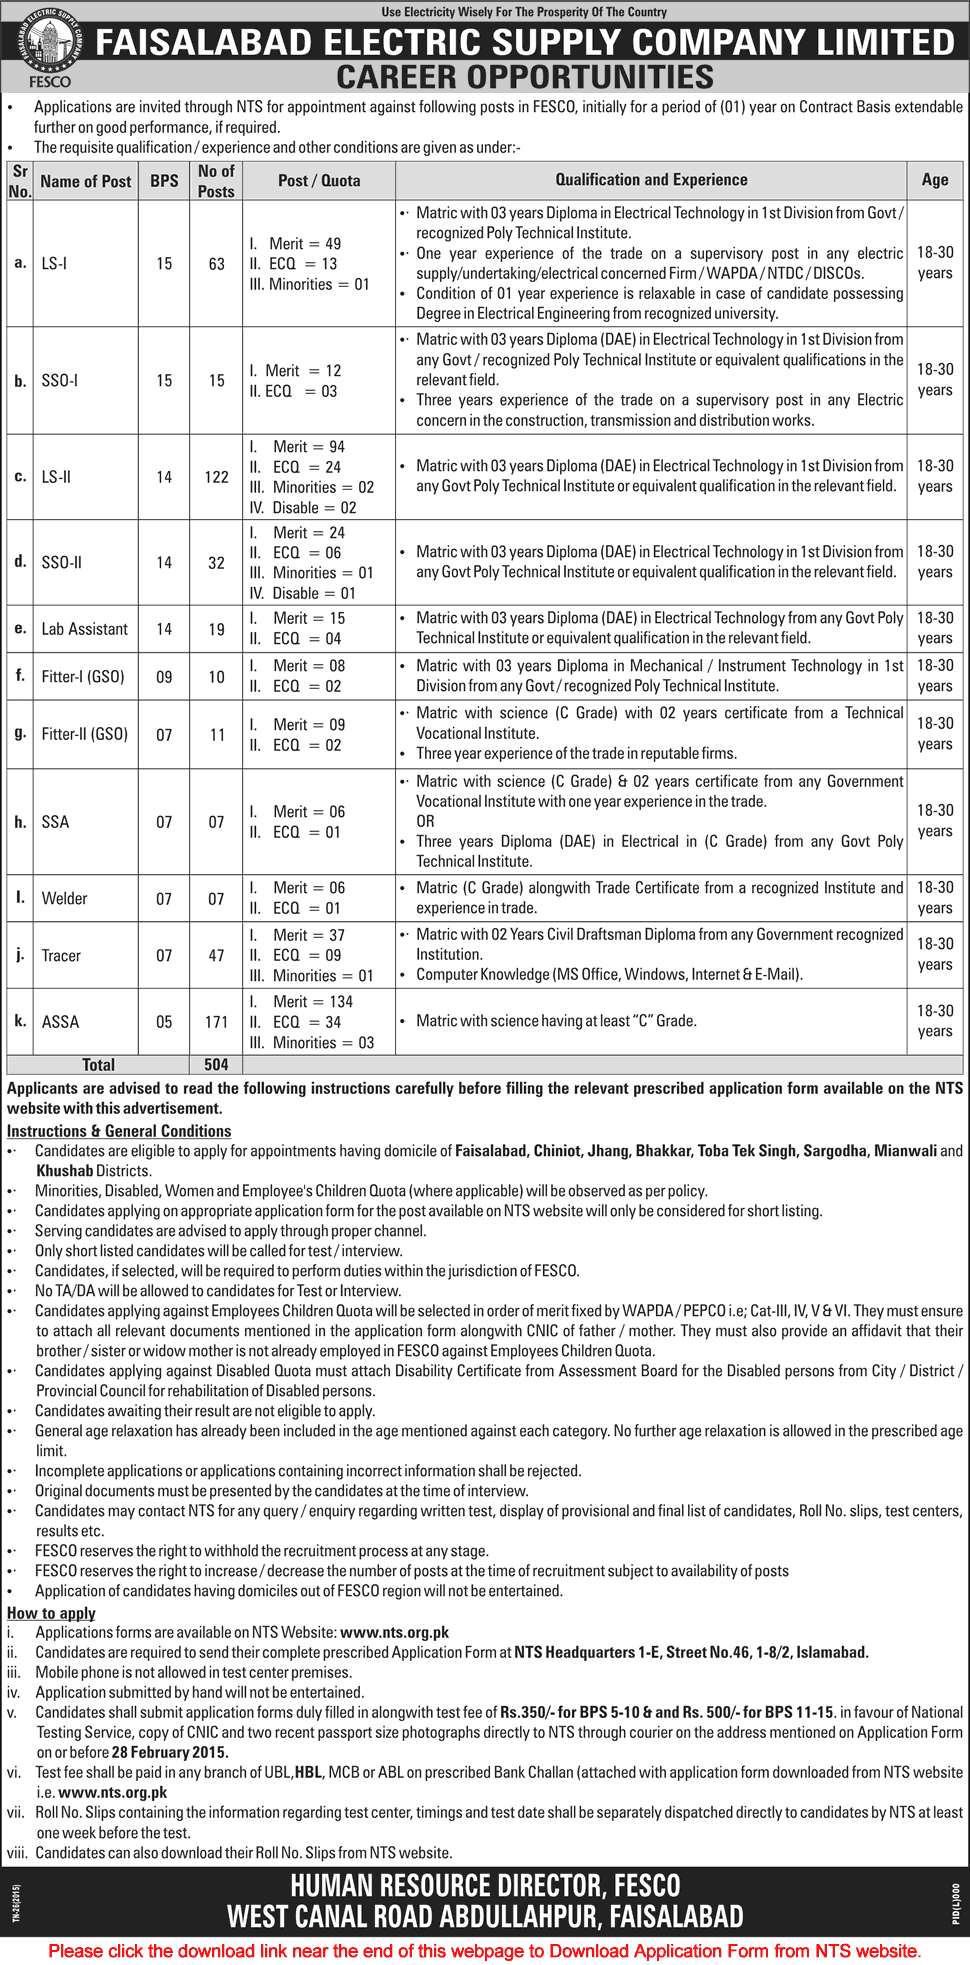 FESCO Jobs 2015 February WAPDA Faisalabad NTS Application Form for LS, SSO, ASSA, Tracer & Others